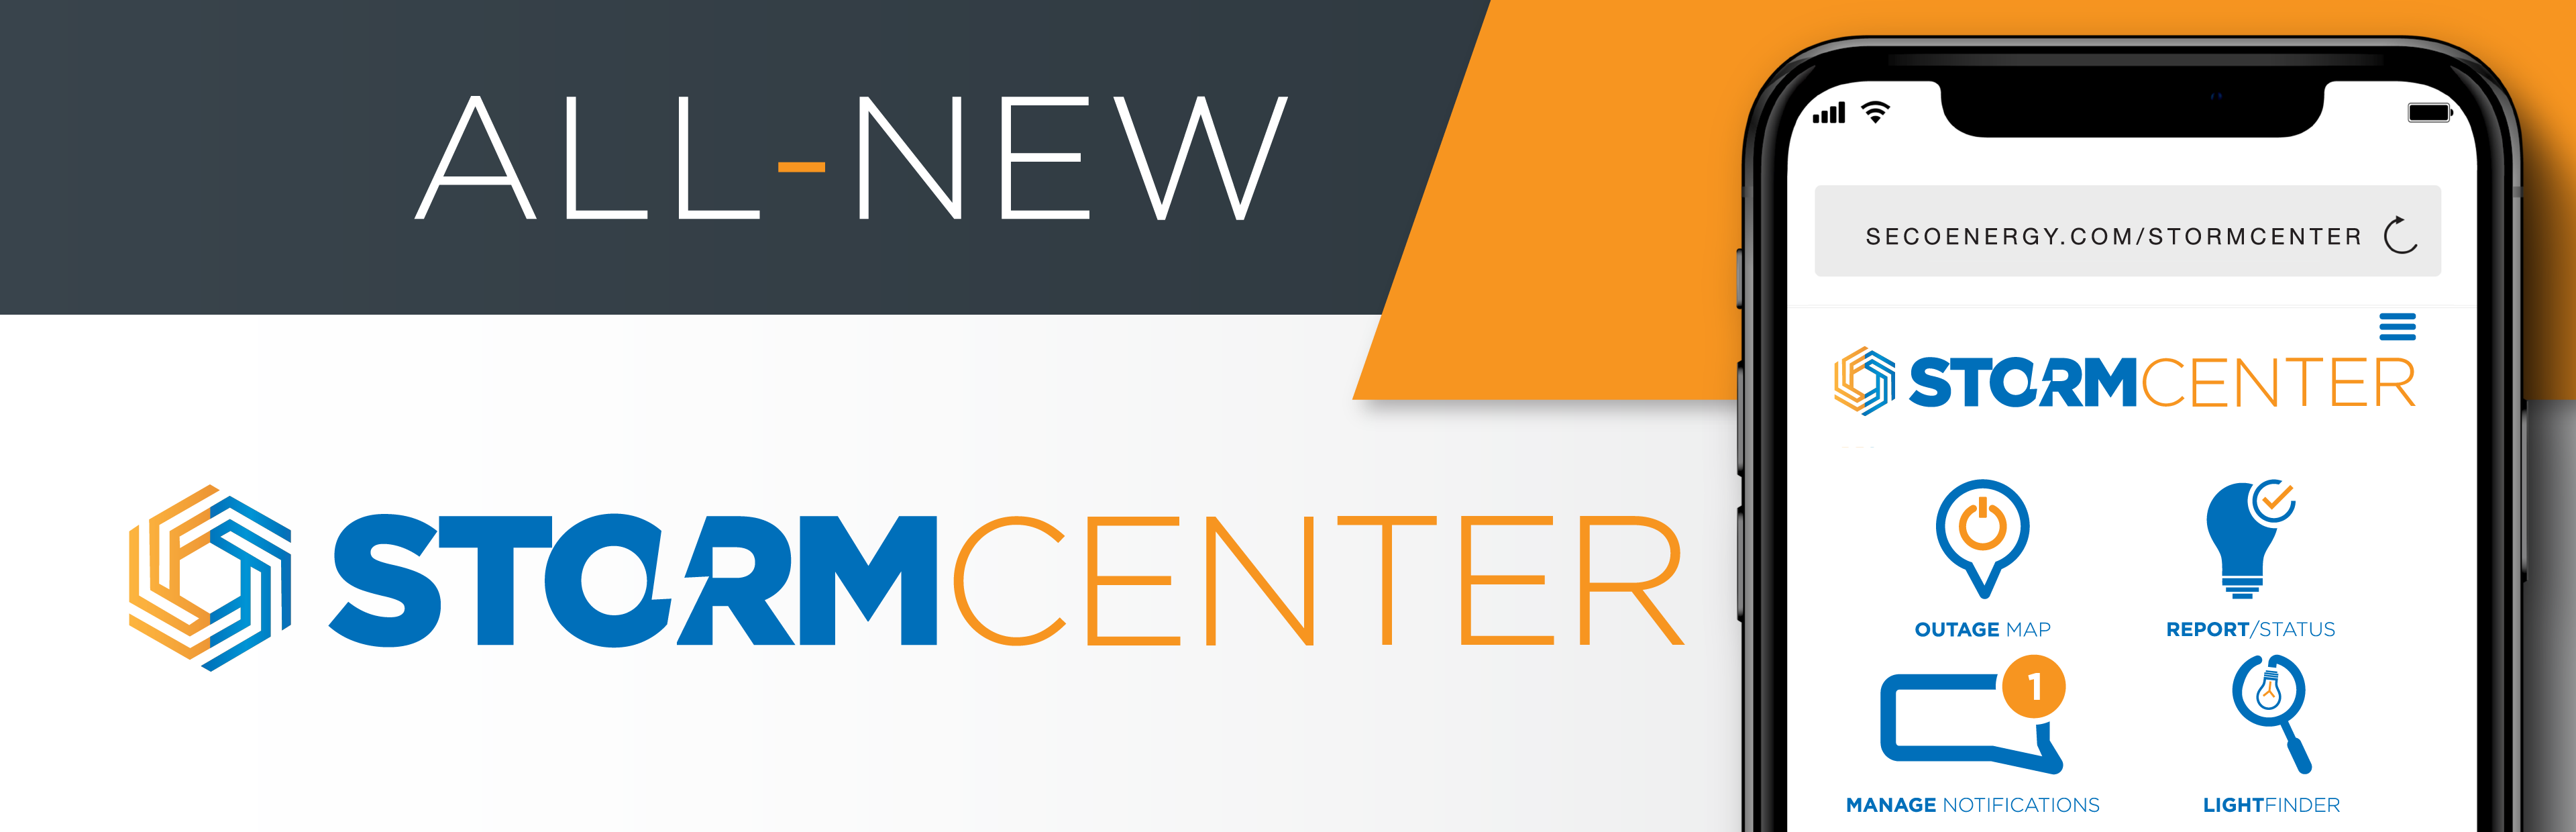 All-new StormCenter web banner